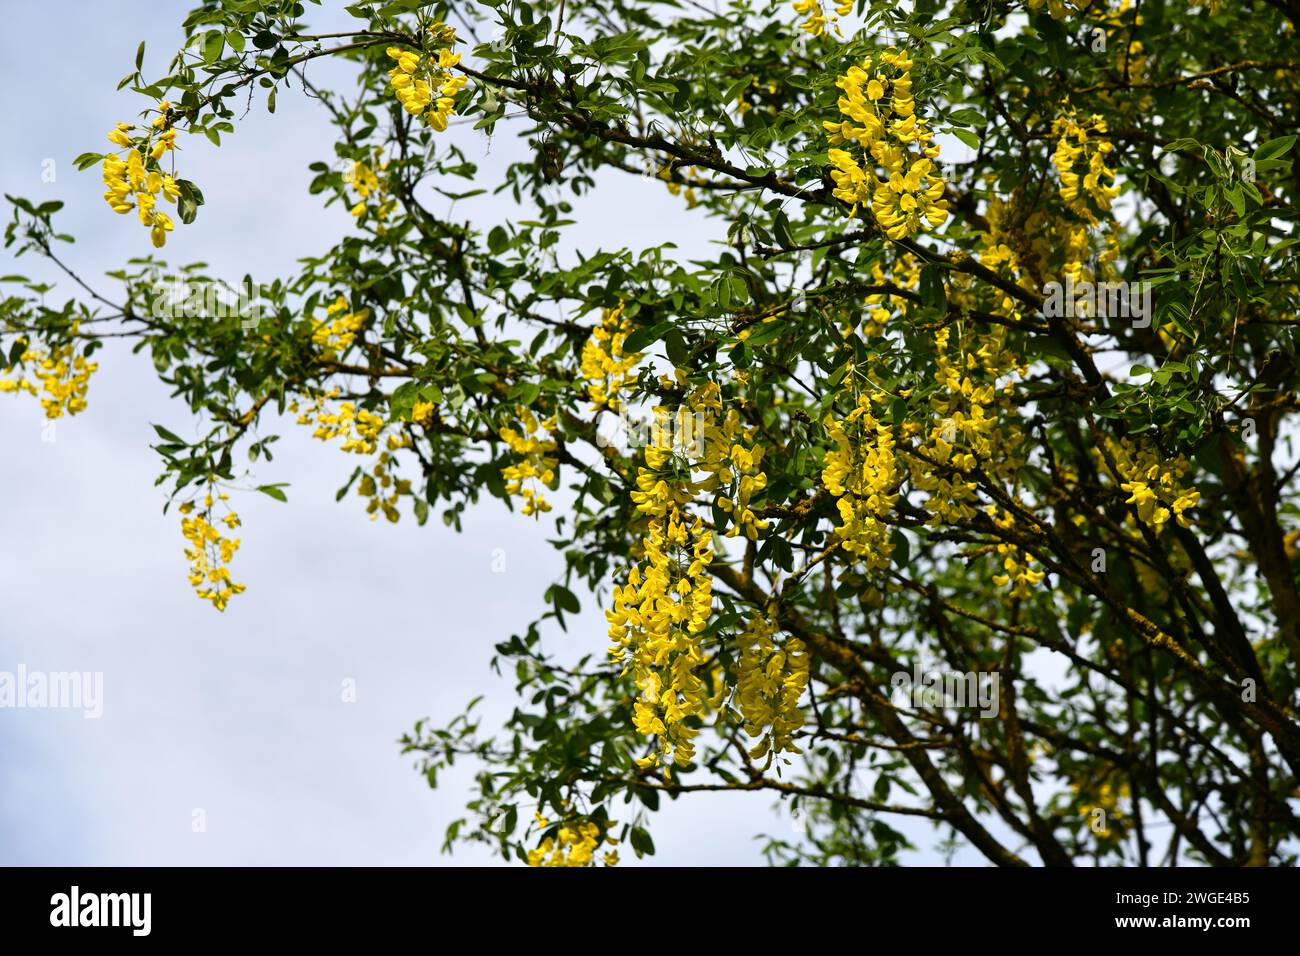 Common laburnum with yellow flowers Stock Photo